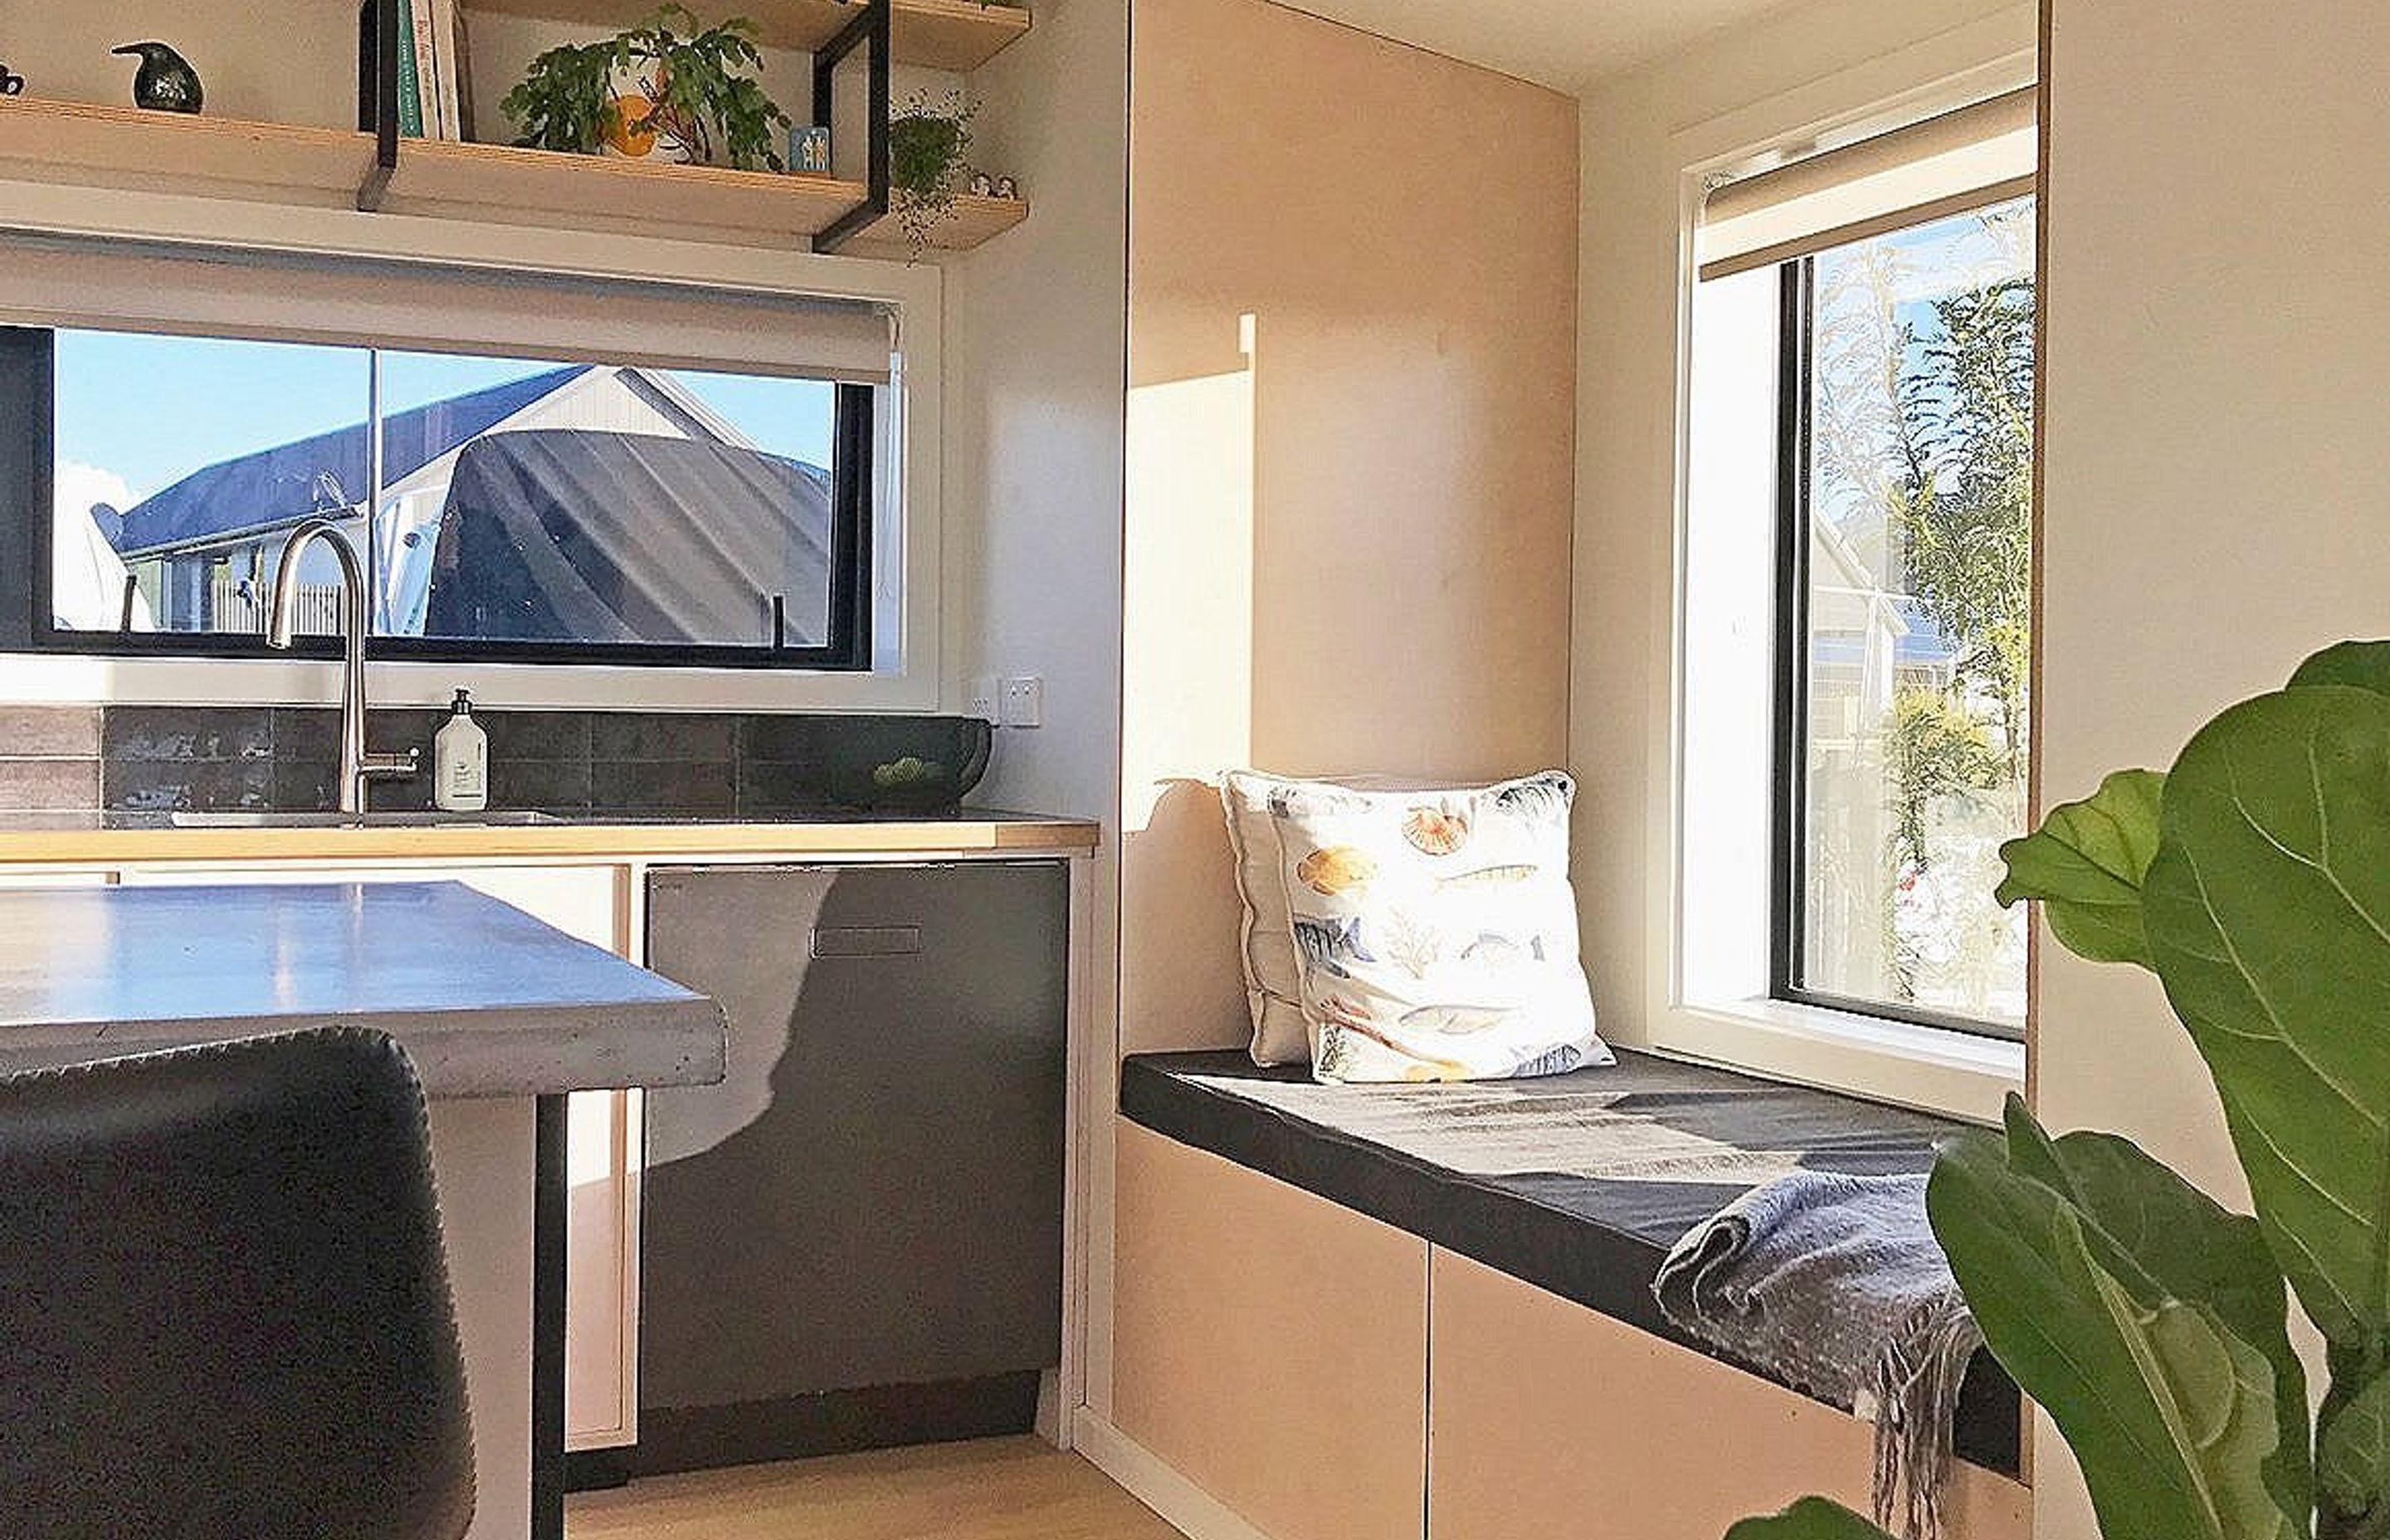 plywood-kitchen-window-seat-motide-1.jpg